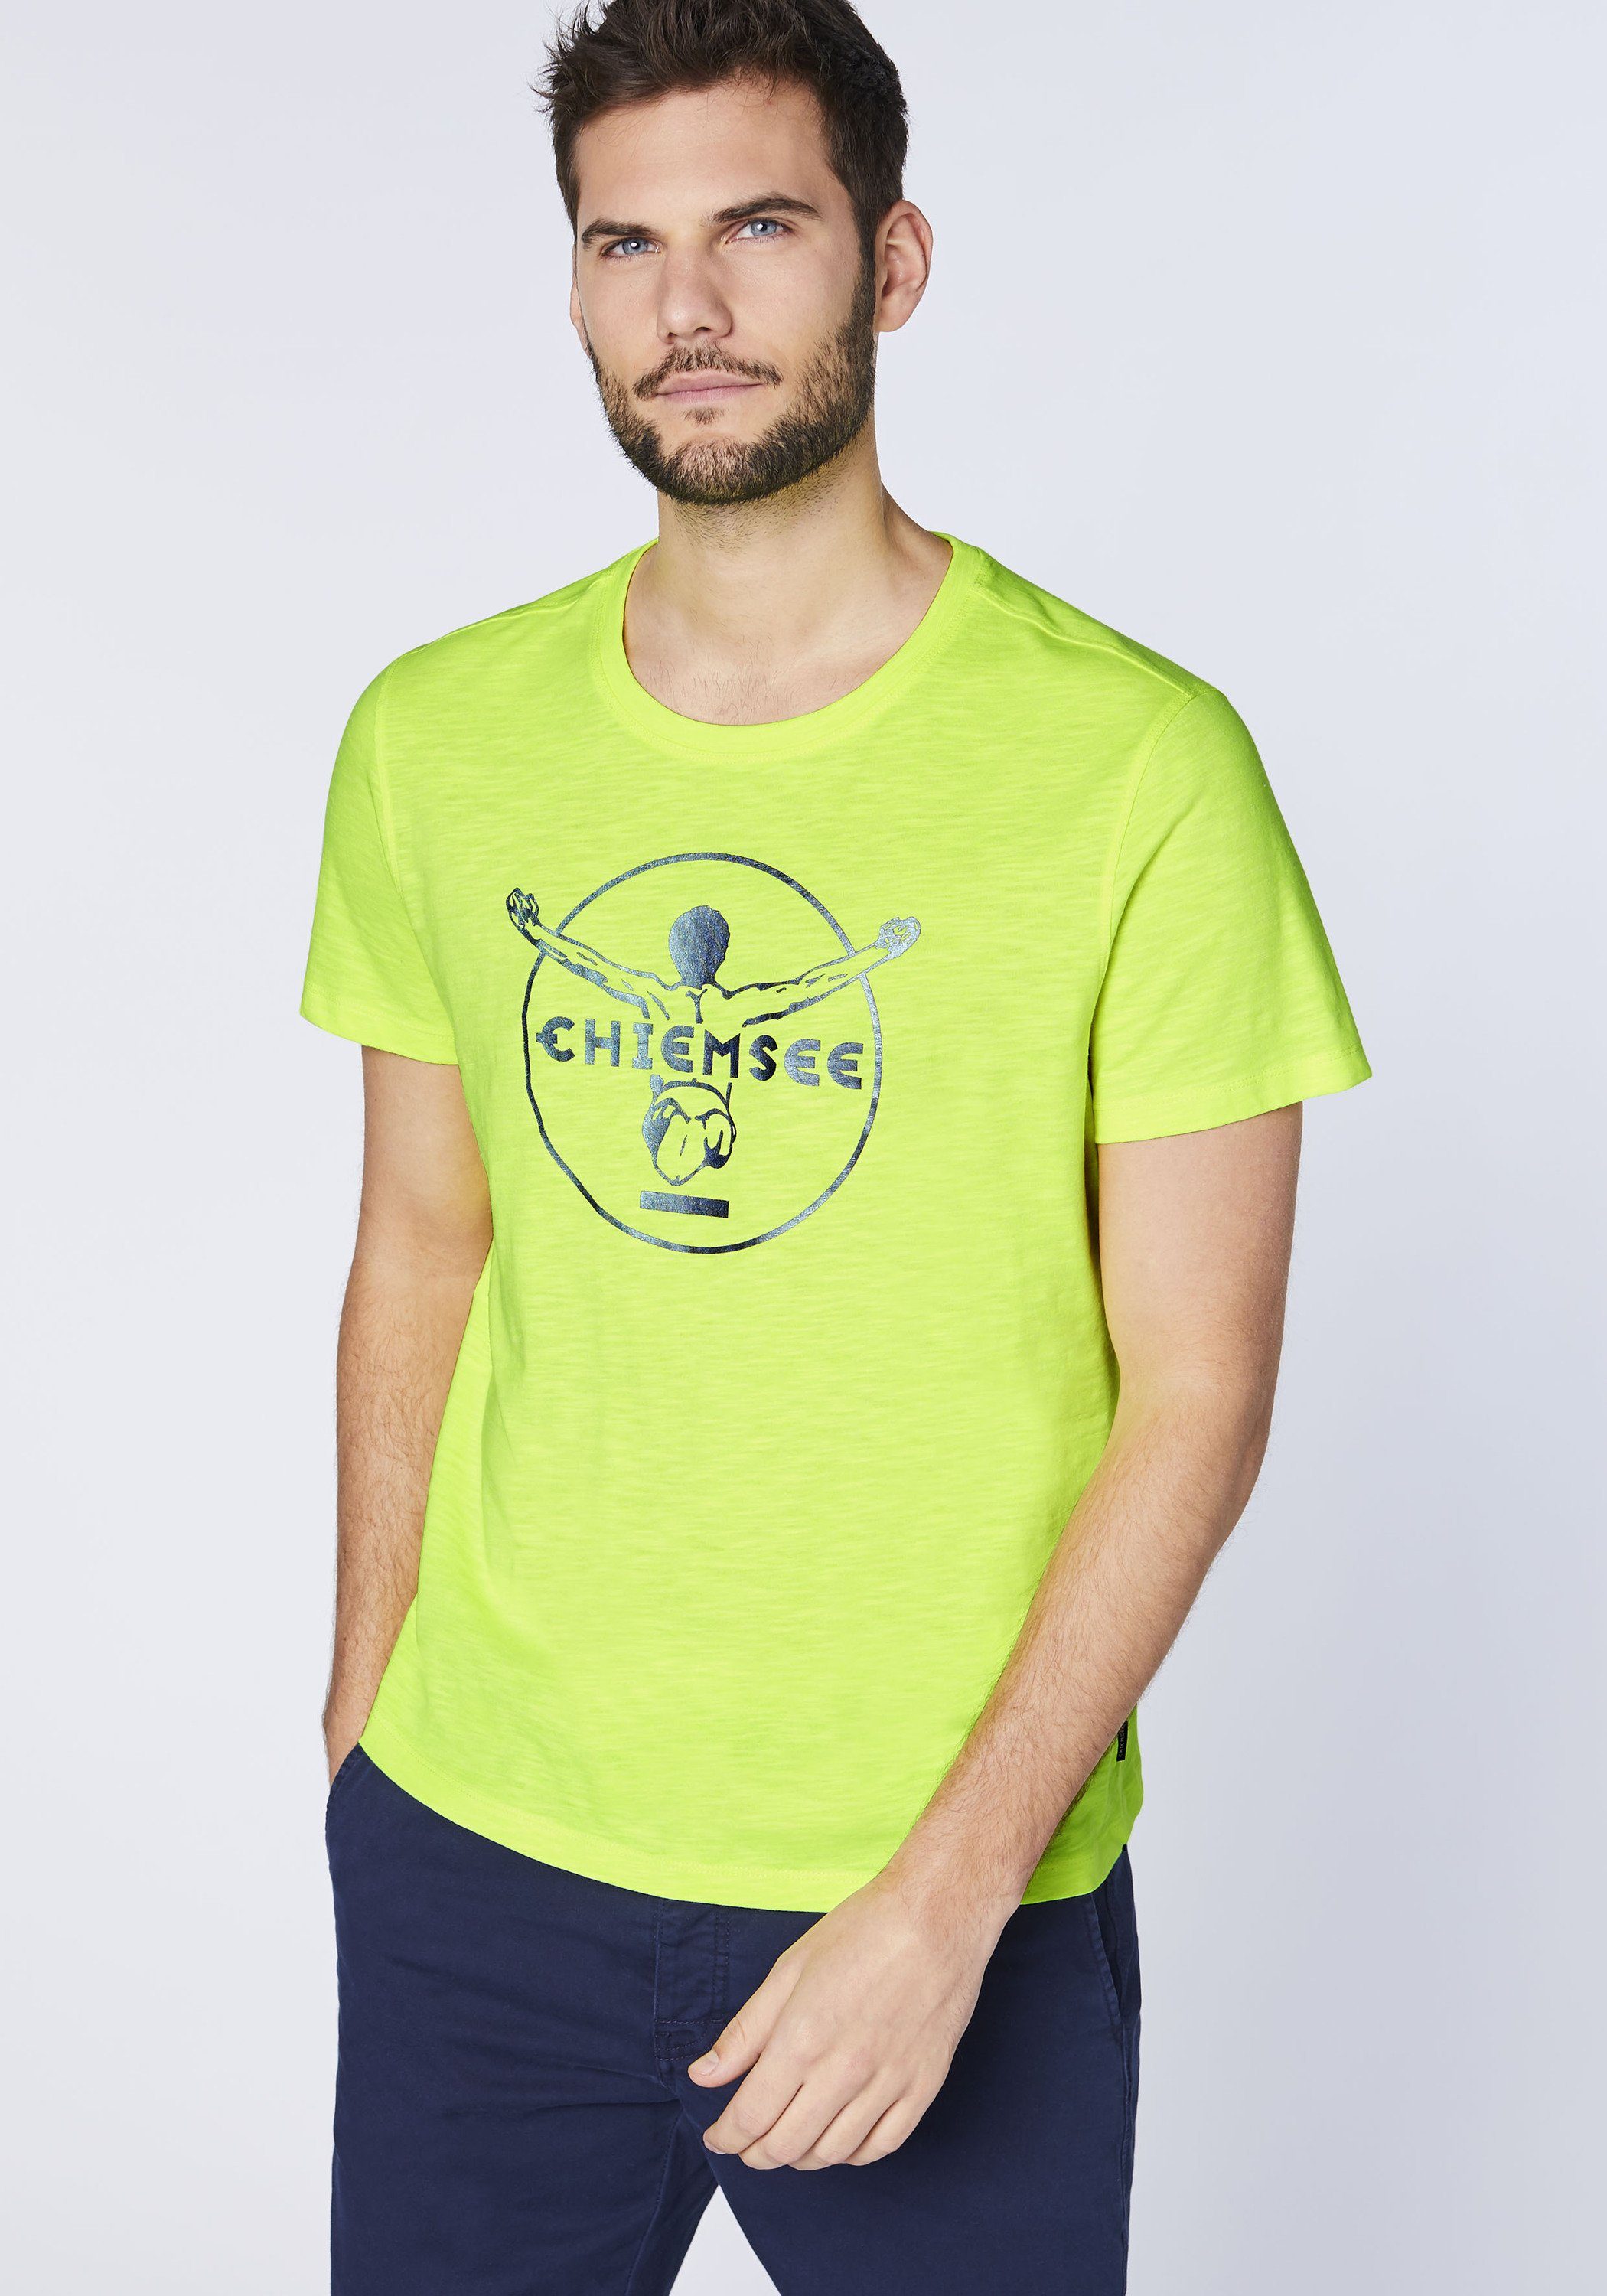 mit 1 Print-Shirt Yellow T-Shirt Safety Chiemsee gedrucktem Label-Symbol